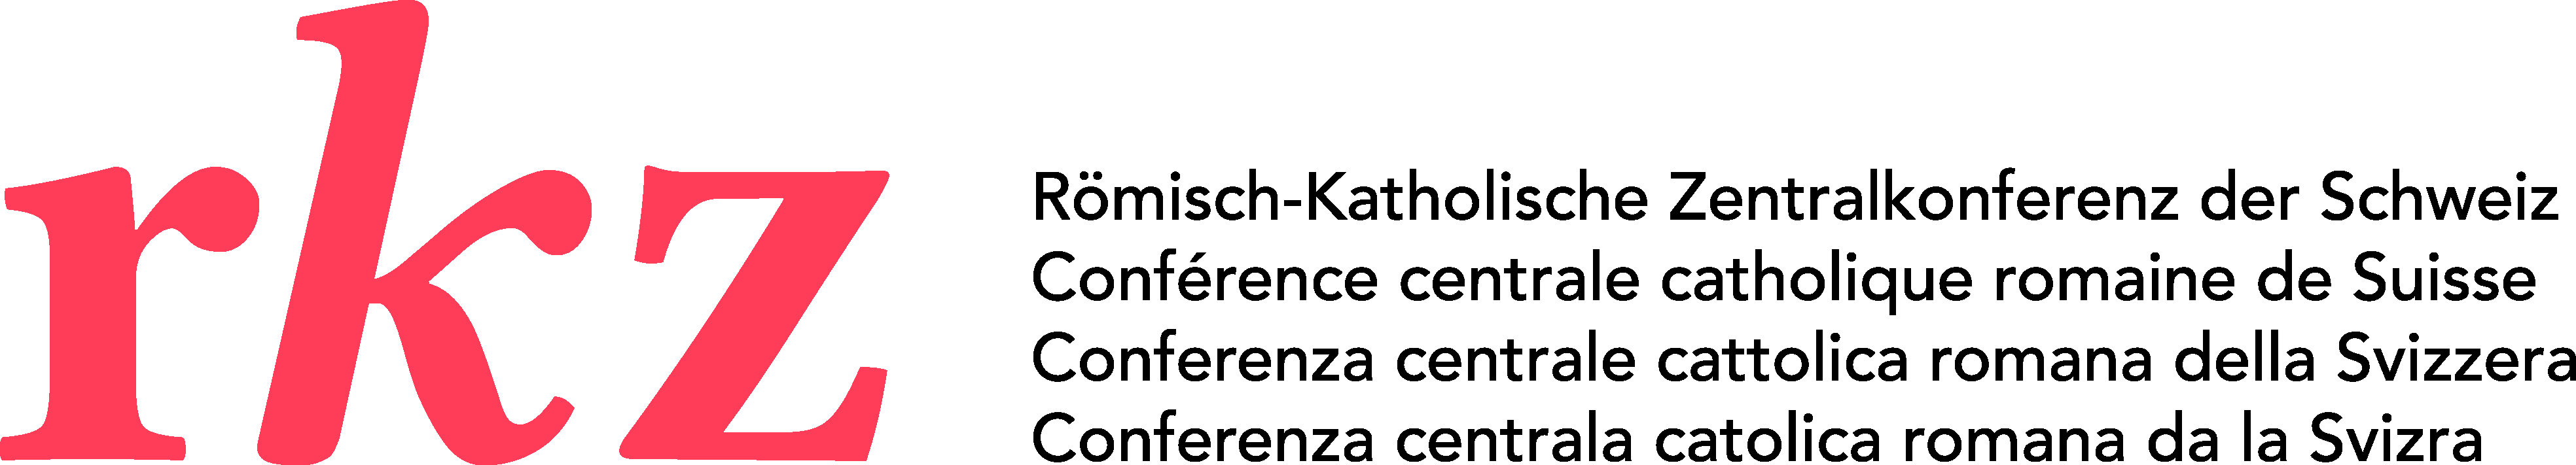 RKZ Logo mitZusatz CYMK